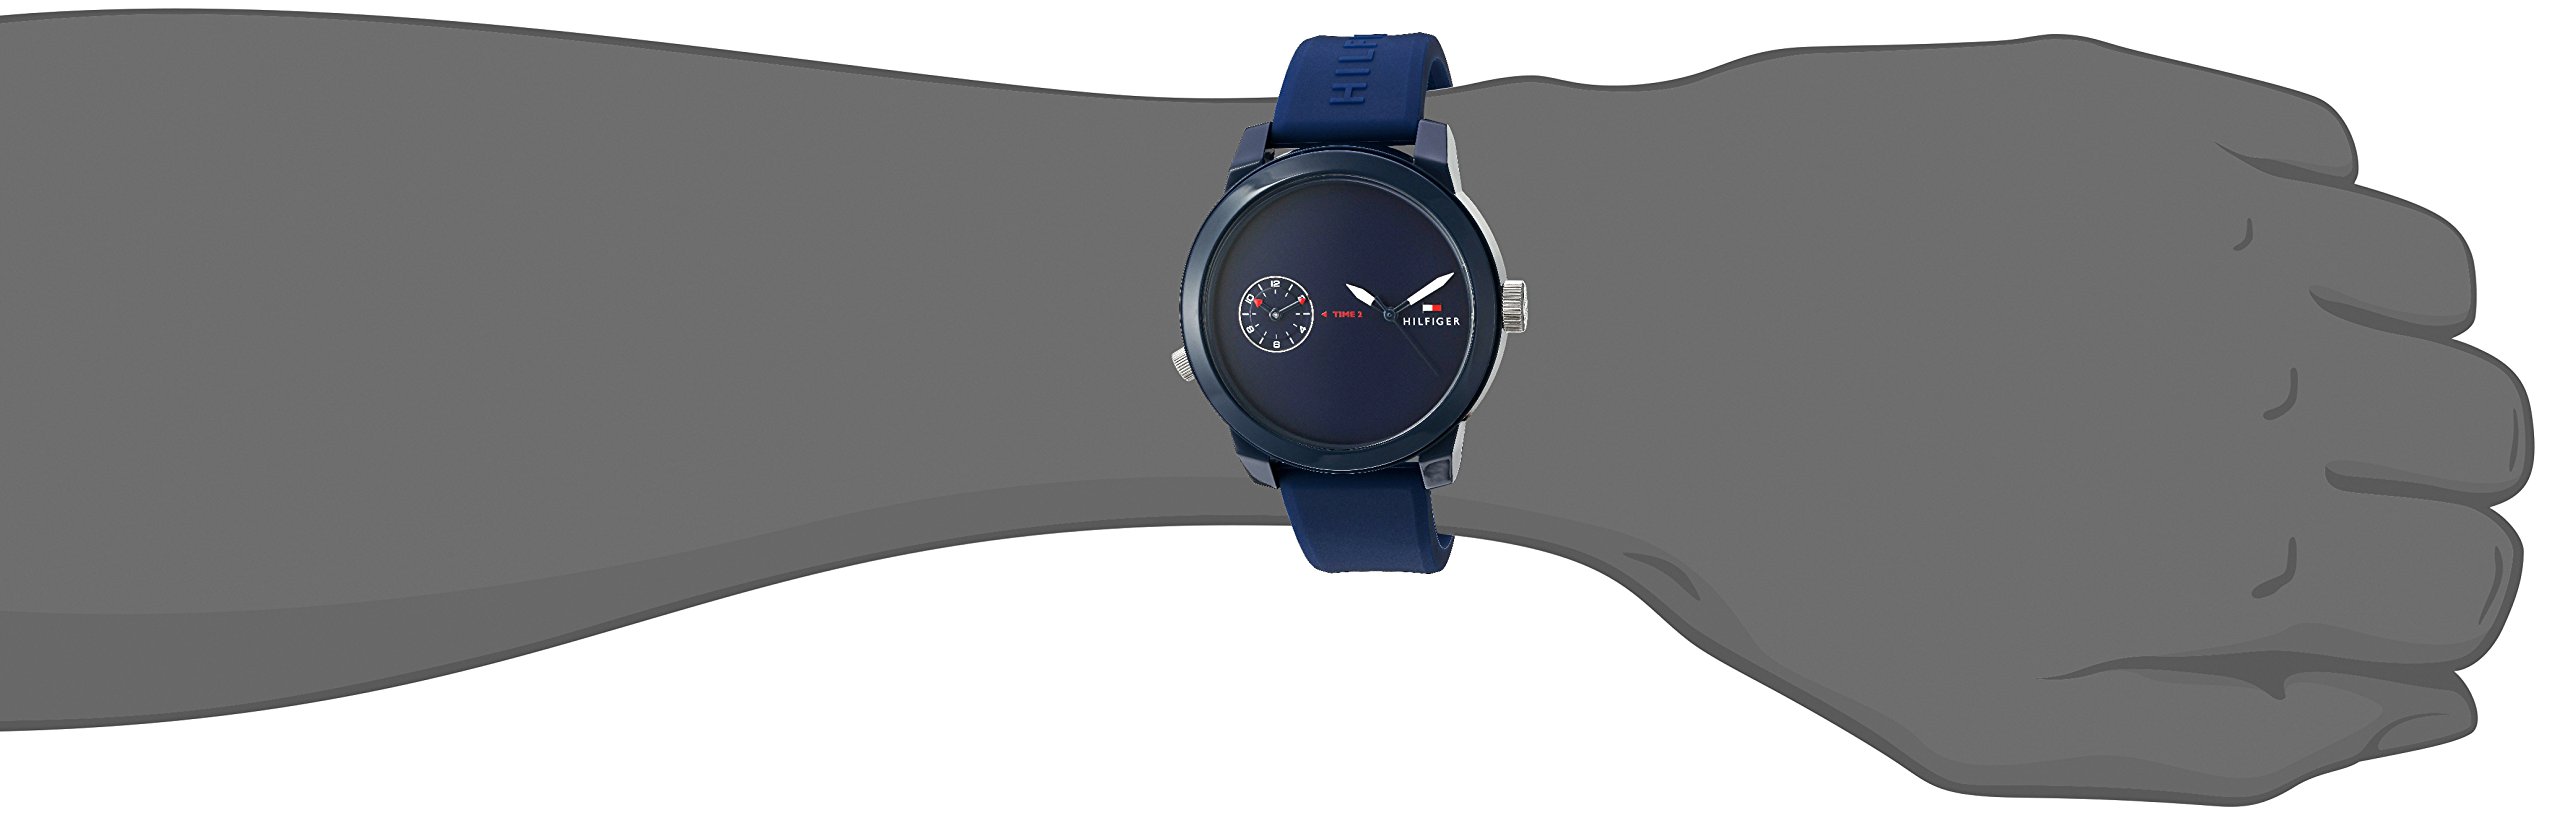 Tommy Hilfiger Men's 1791325 Analog Display Quartz Blue Watch